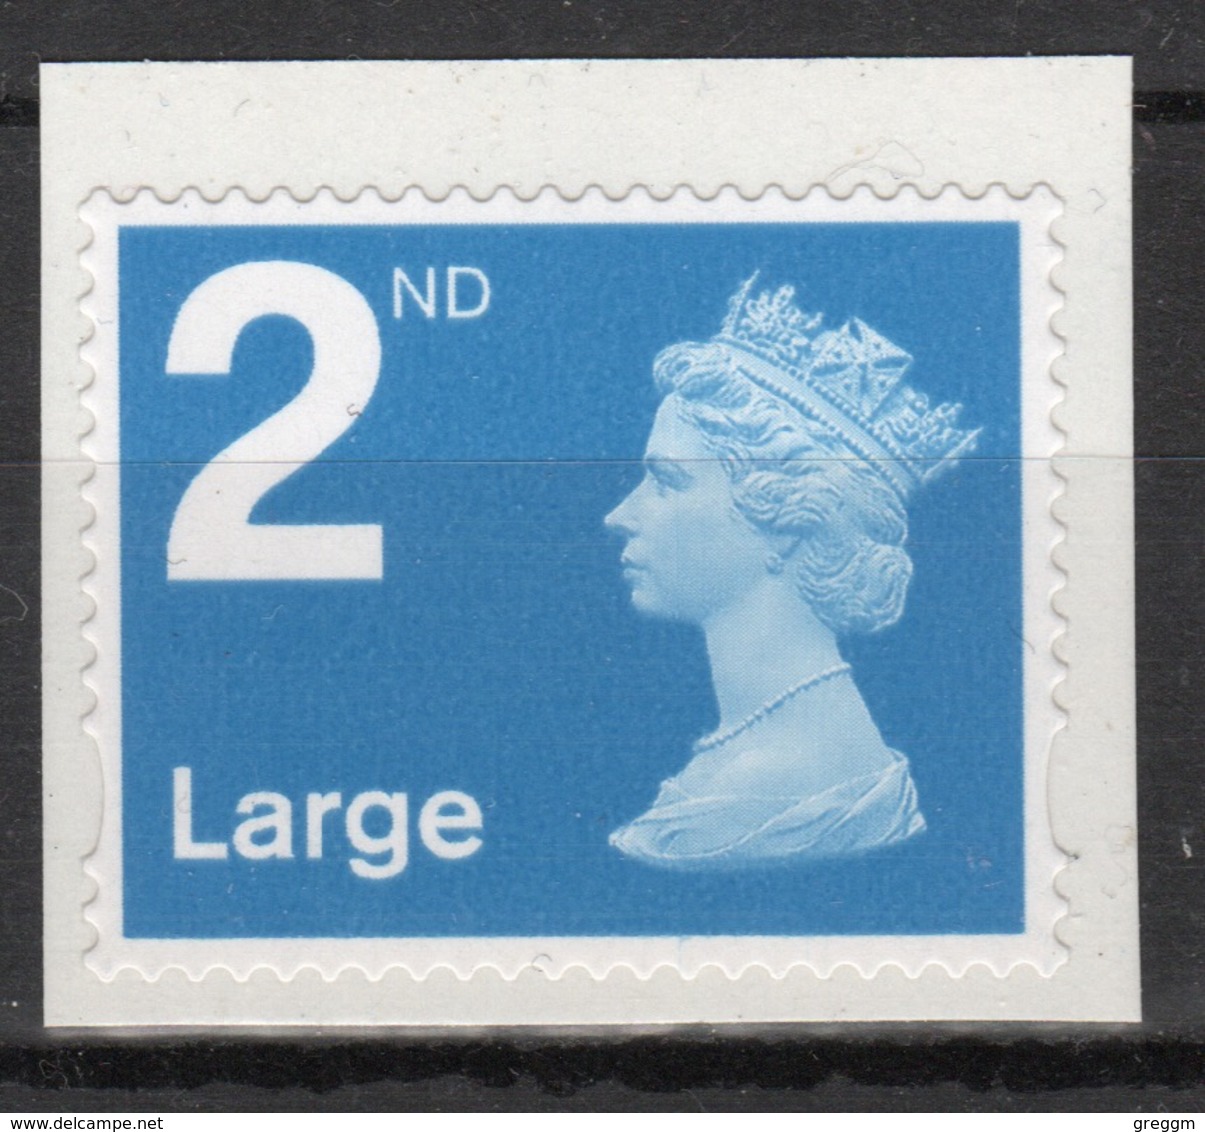 Great Britain 2006 Decimal Machin 2nd Large Self Adhesive Définitive Stamp. - Unused Stamps